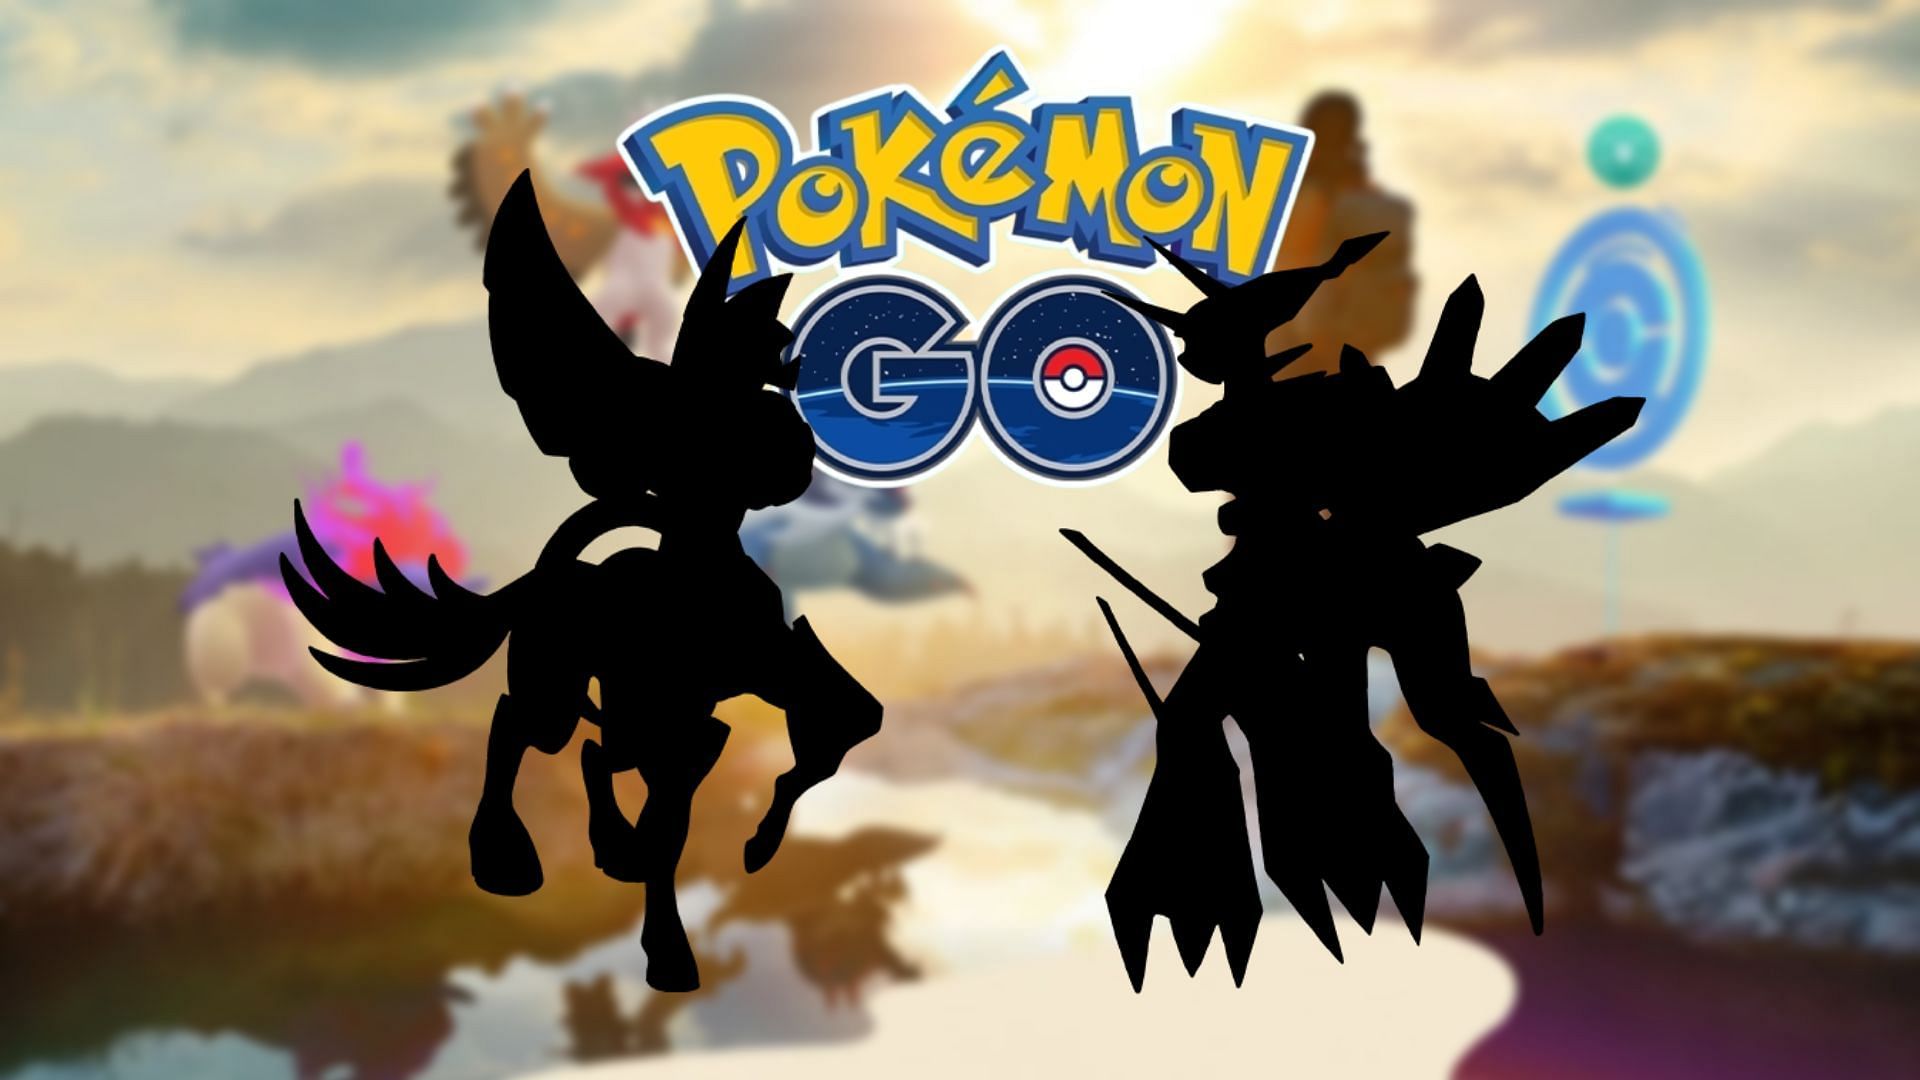 Event Gameplay  Pokémon GO Tour: Sinnoh – Los Angeles